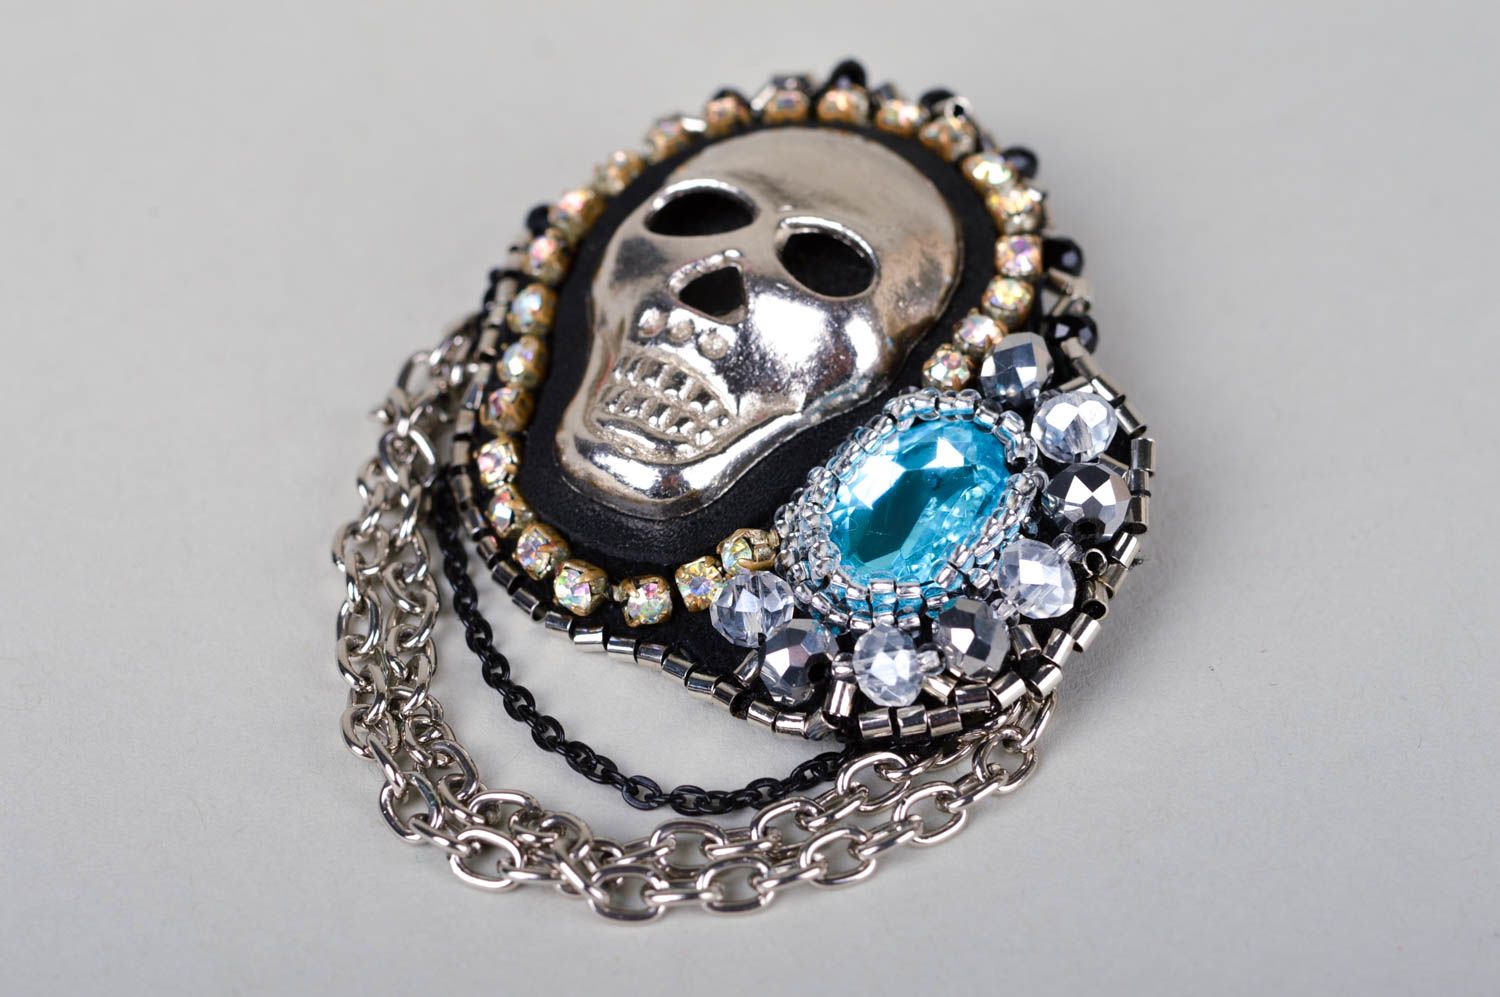 Handmade lovely brooch stylish fashionable accessories designer jewelry photo 1